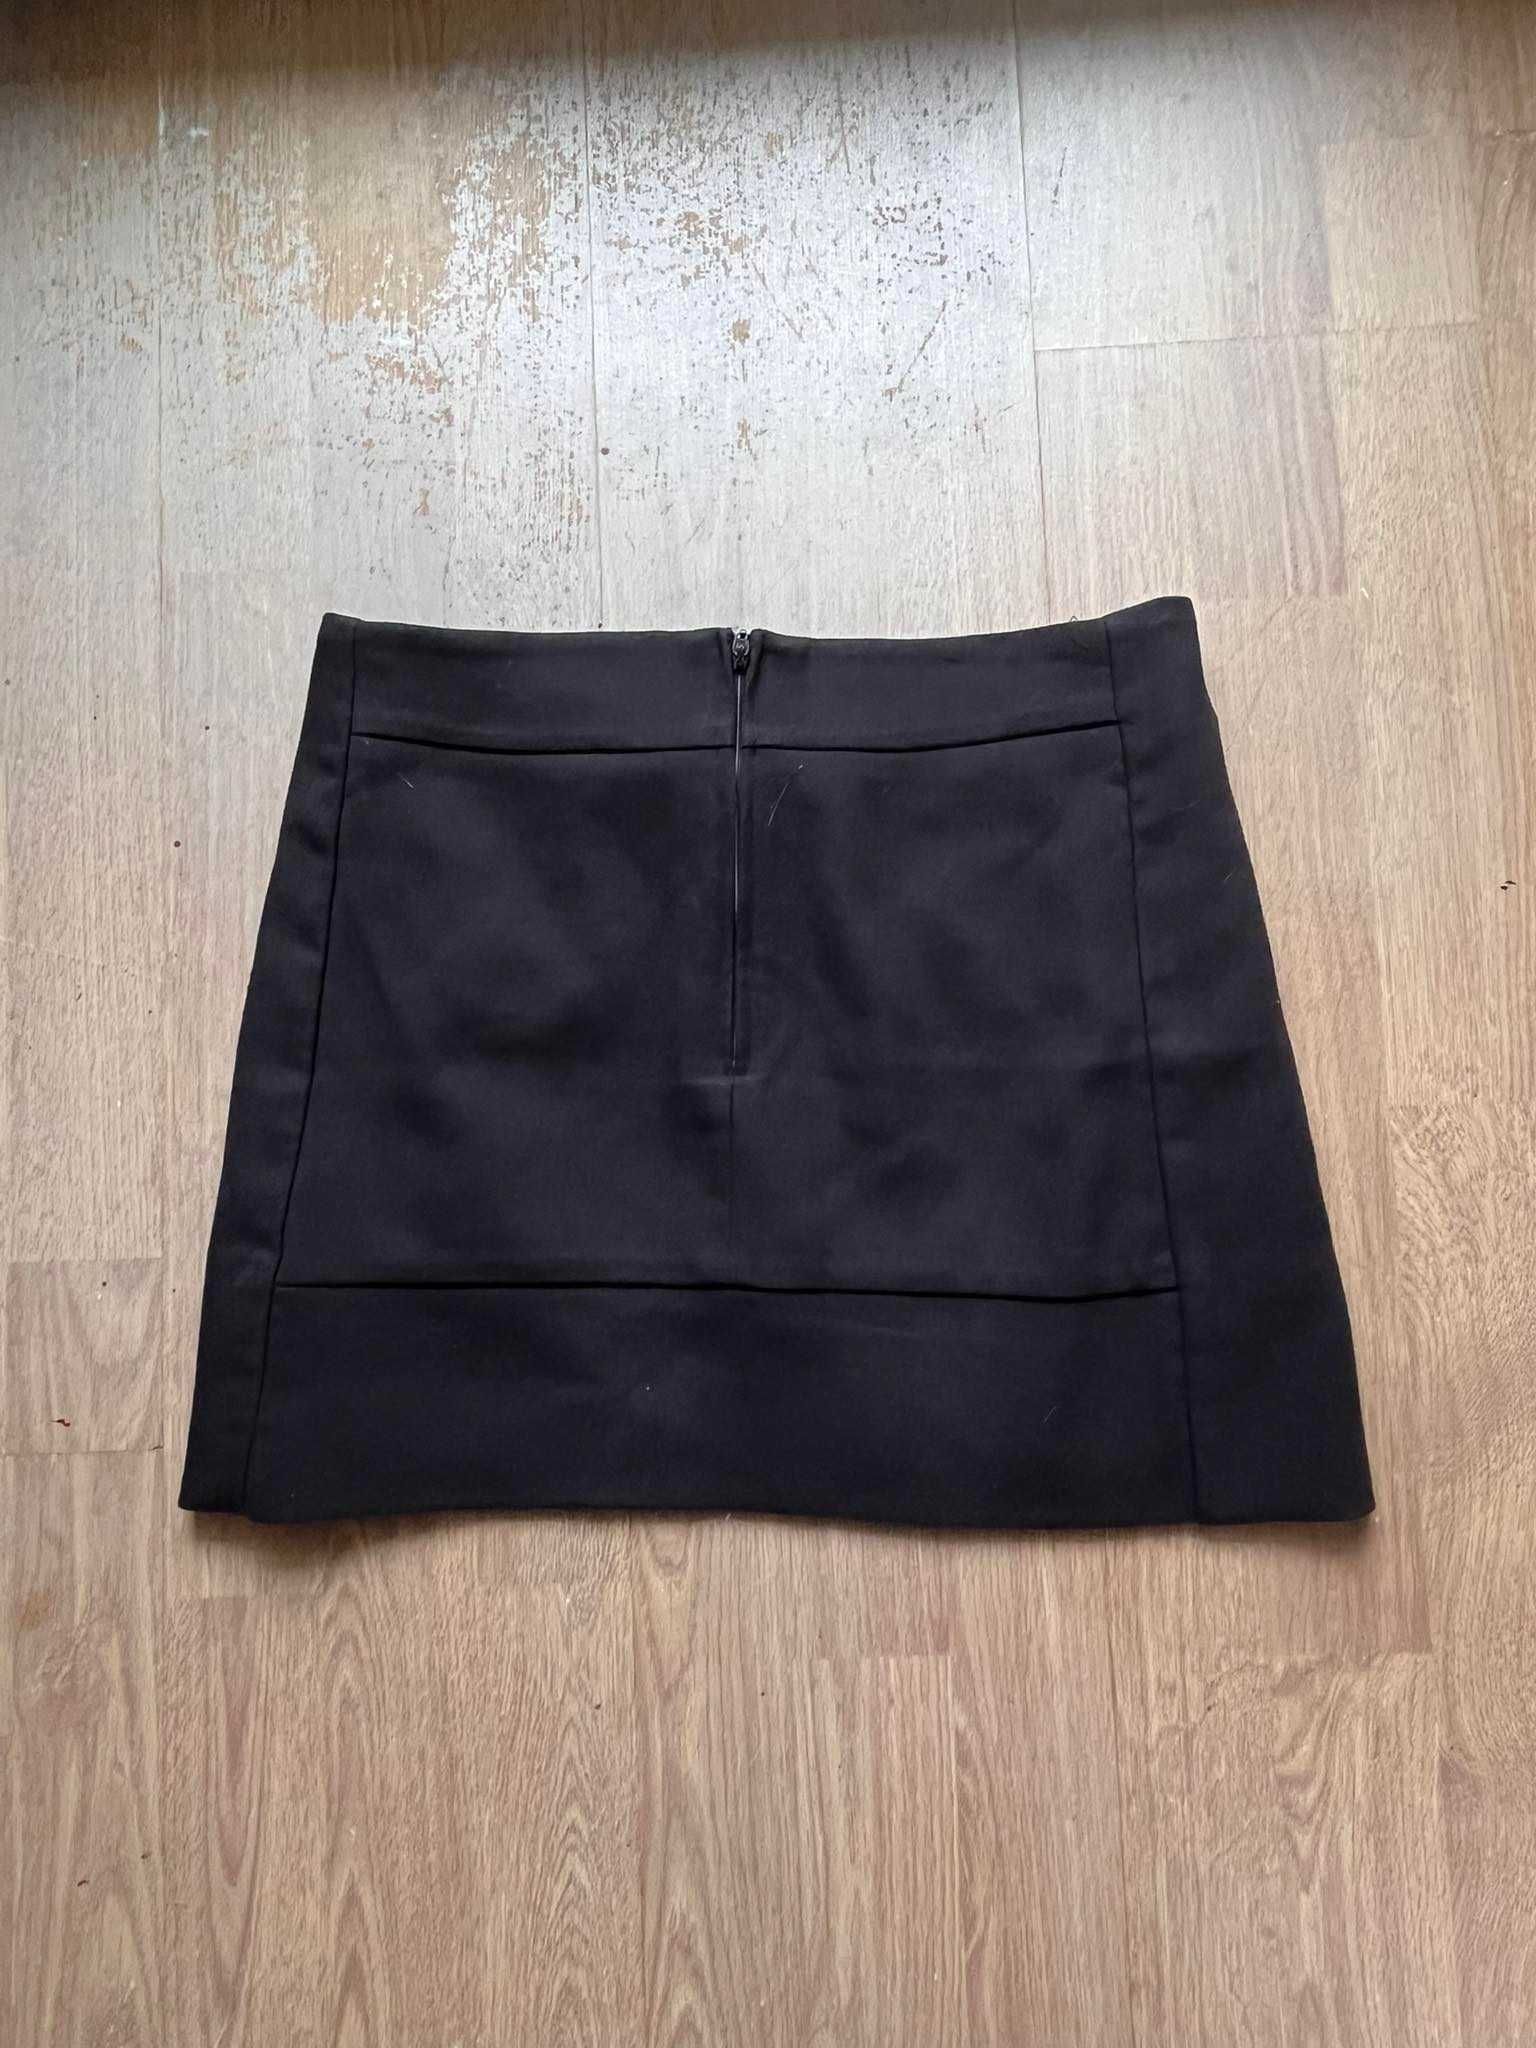 Spódnica mini czarna Orsay r.34/36